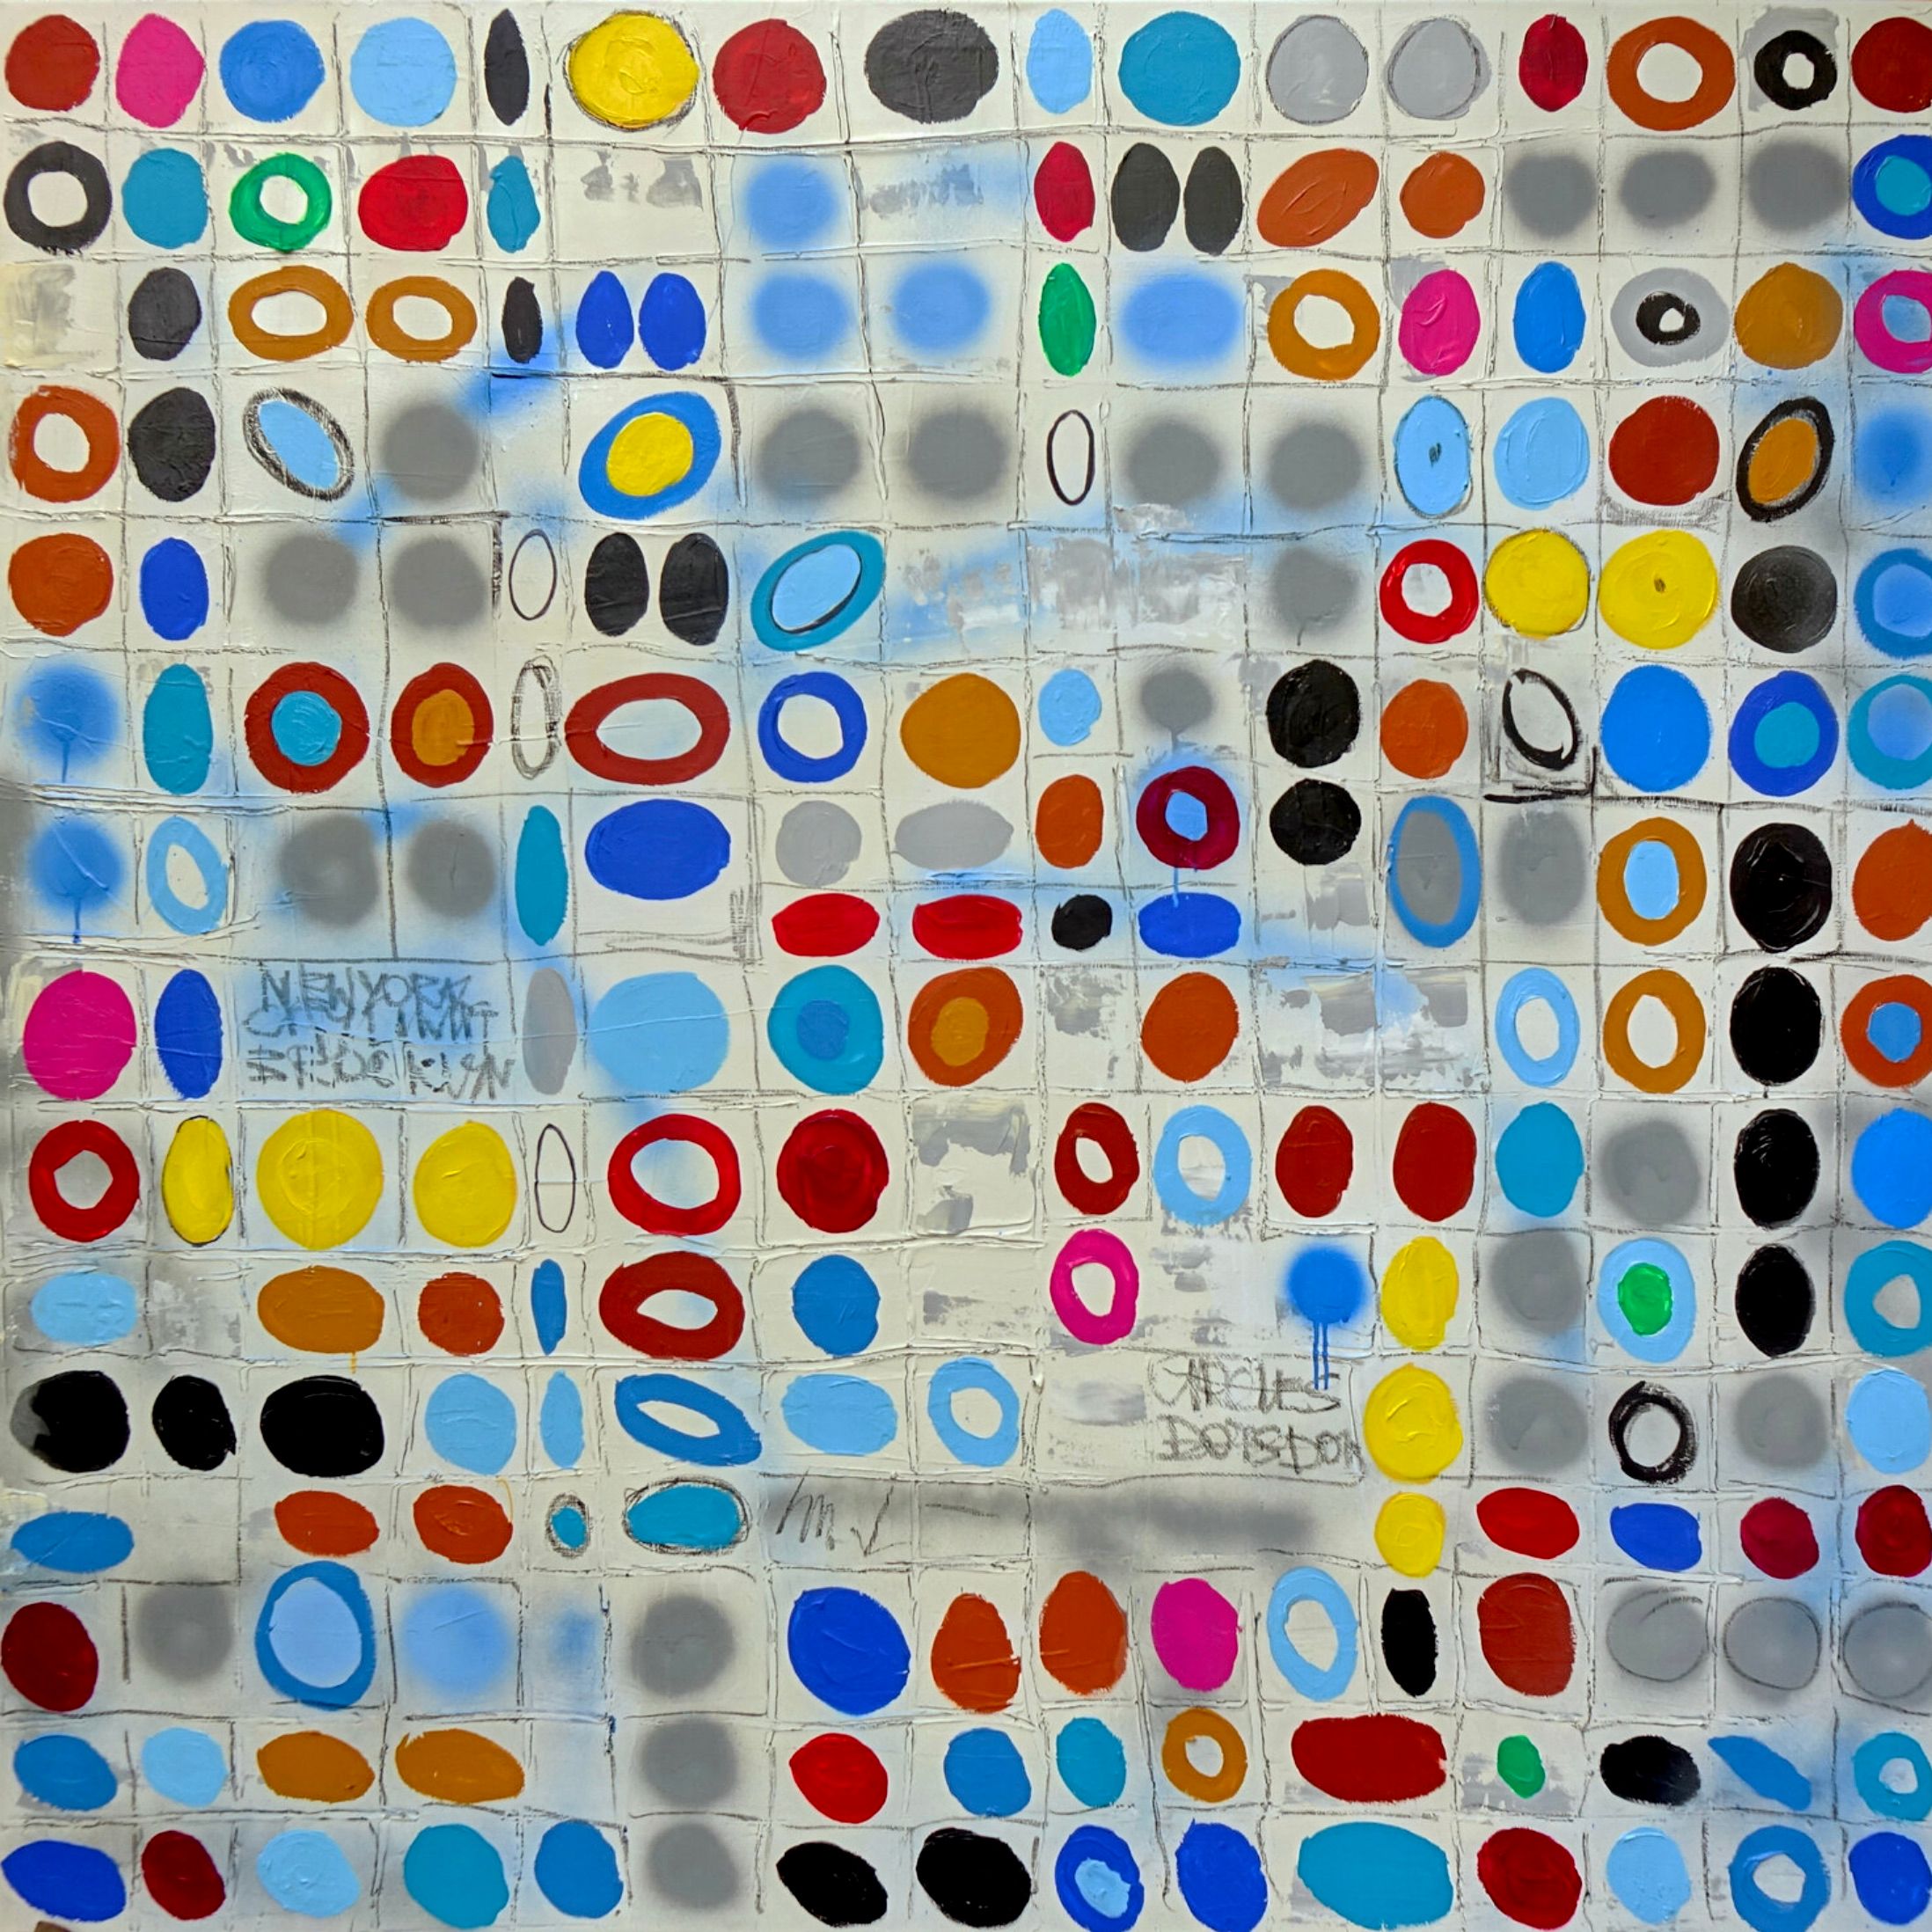 Wojtek Babski, "Circles 2", cerchi e punti, pittura pop art di grande formato su tela